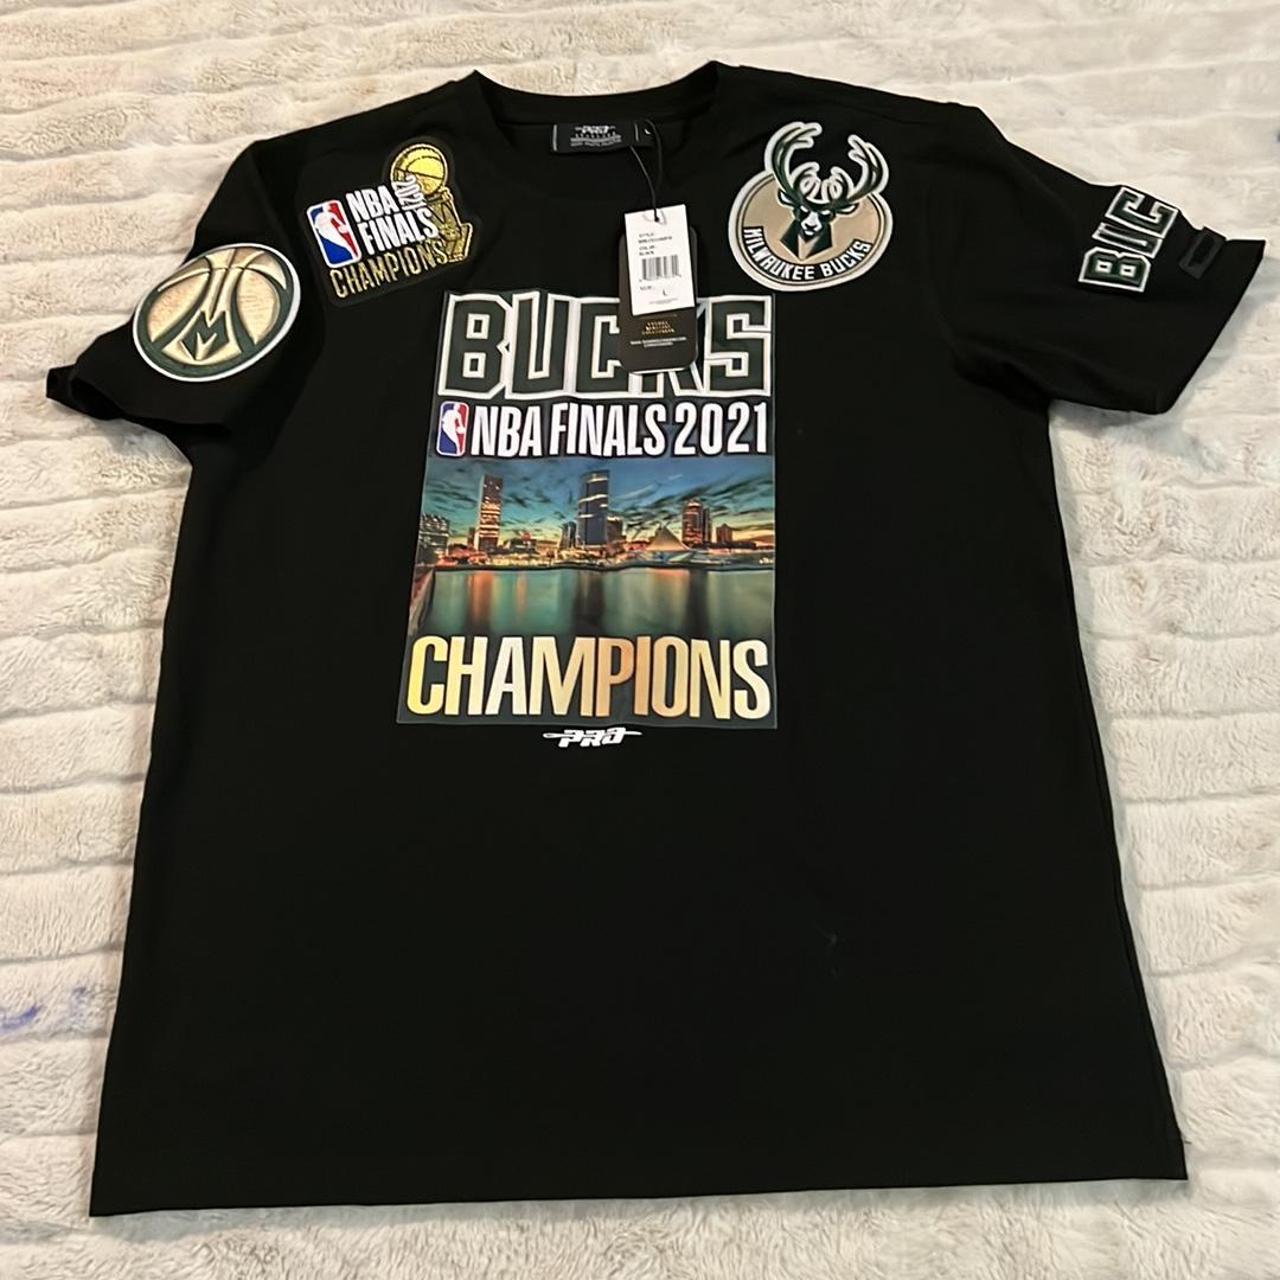 bucks championship shirt' Men's T-Shirt